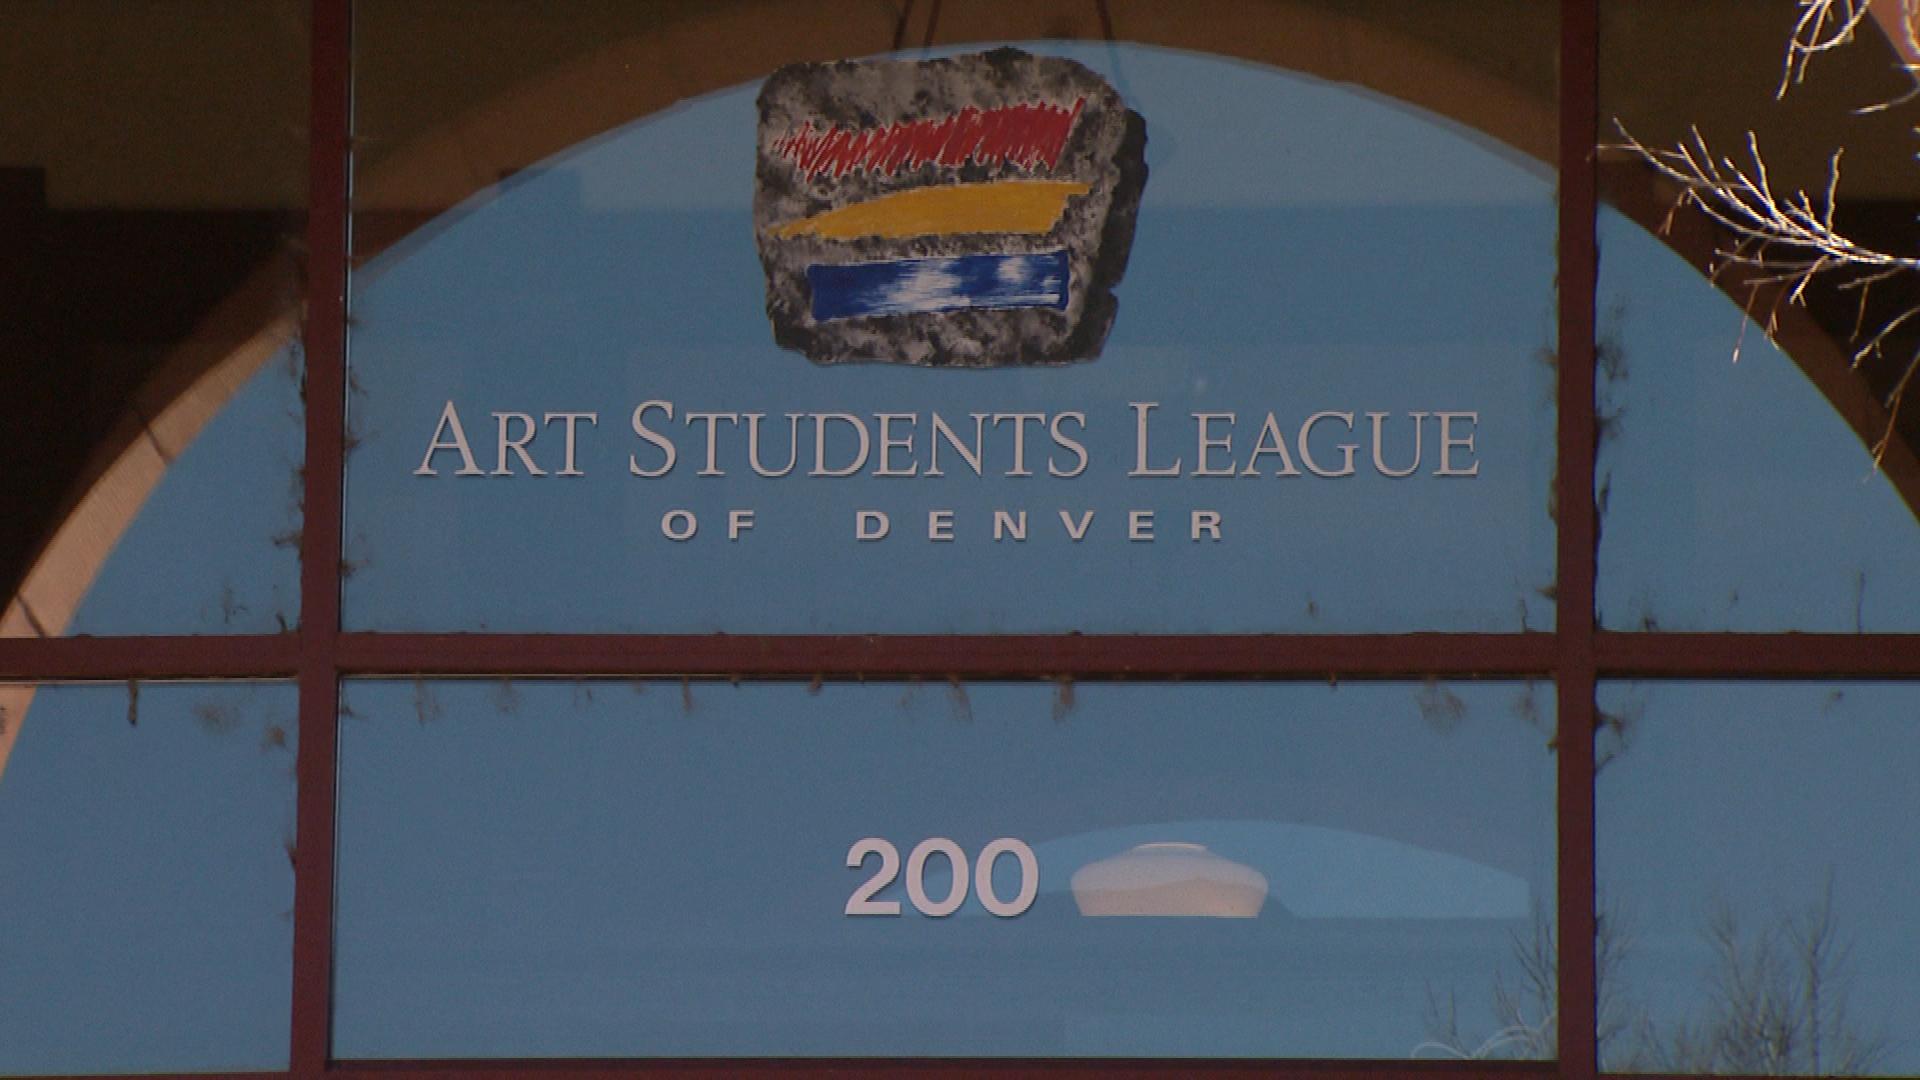 Art Students League of Denver (credit: CBS)